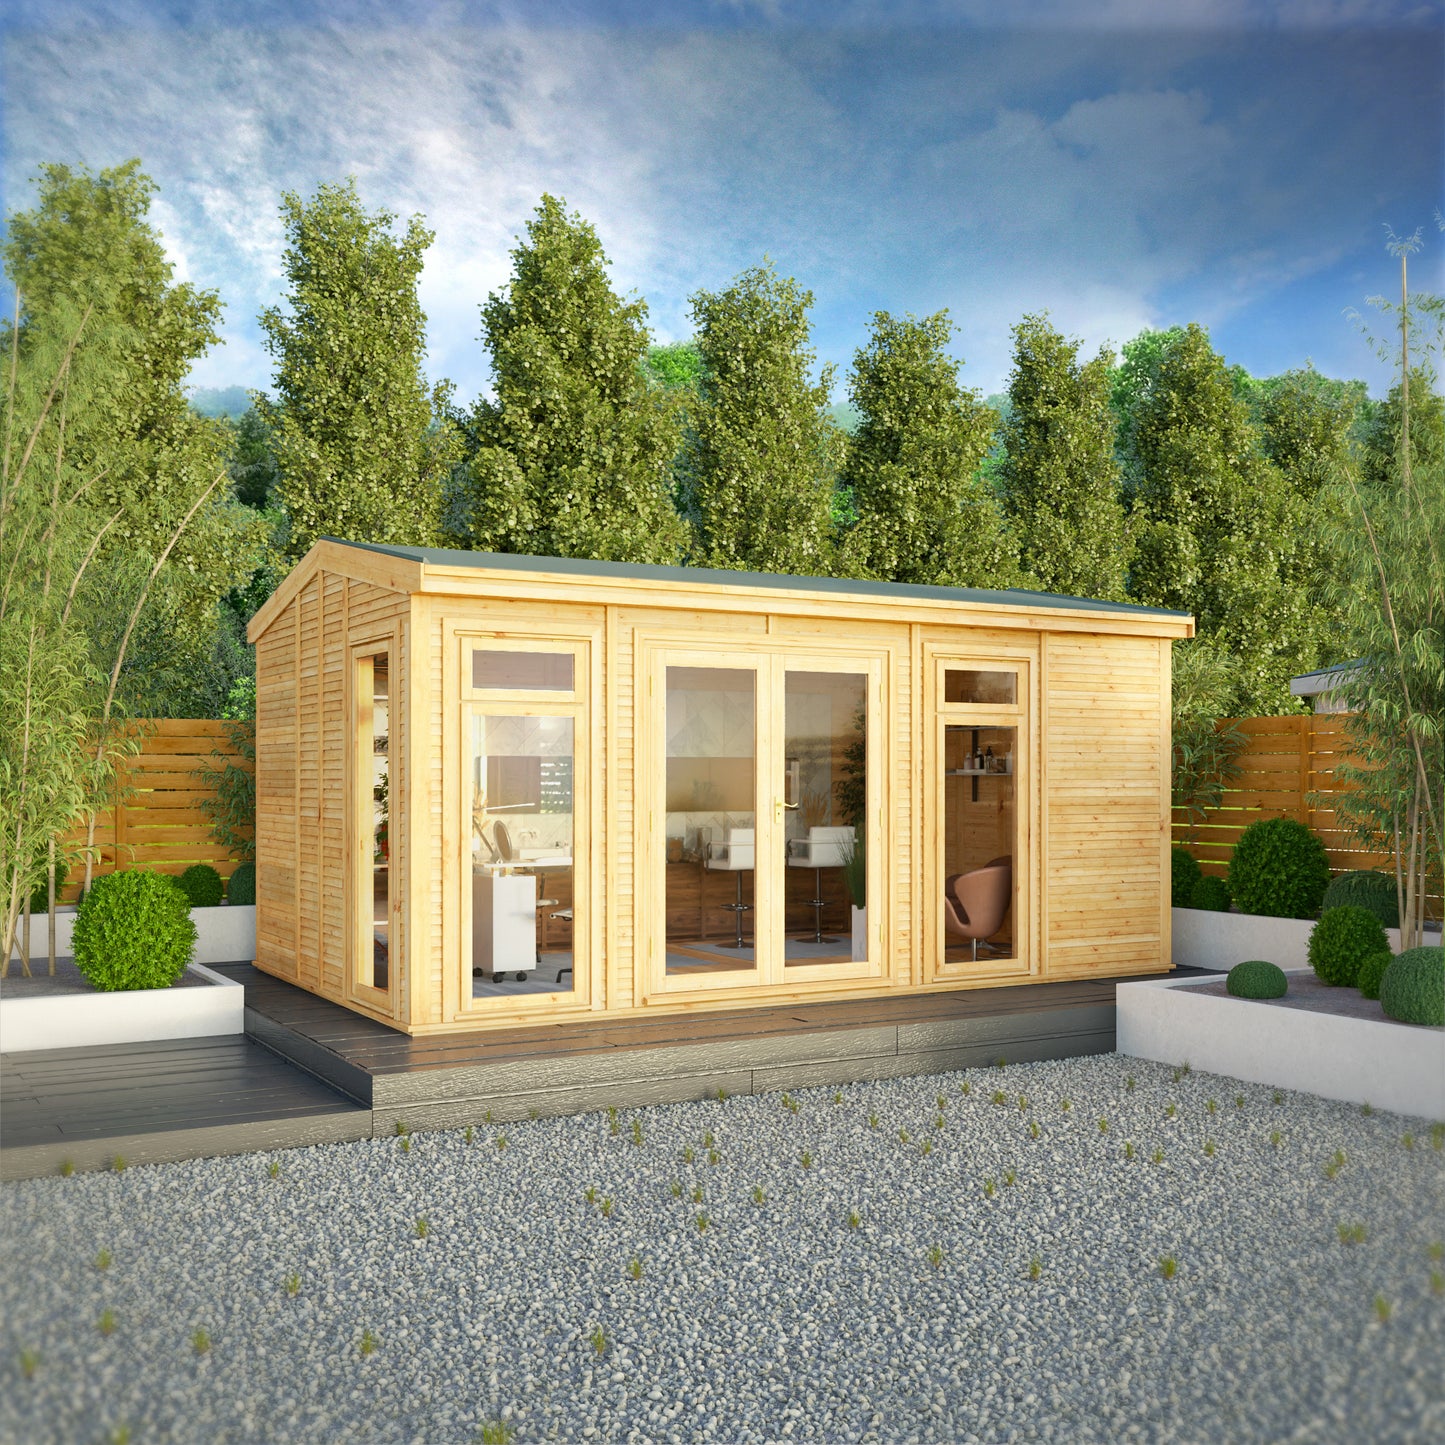 The Rufford 5m x 3m Premium Insulated Garden Room